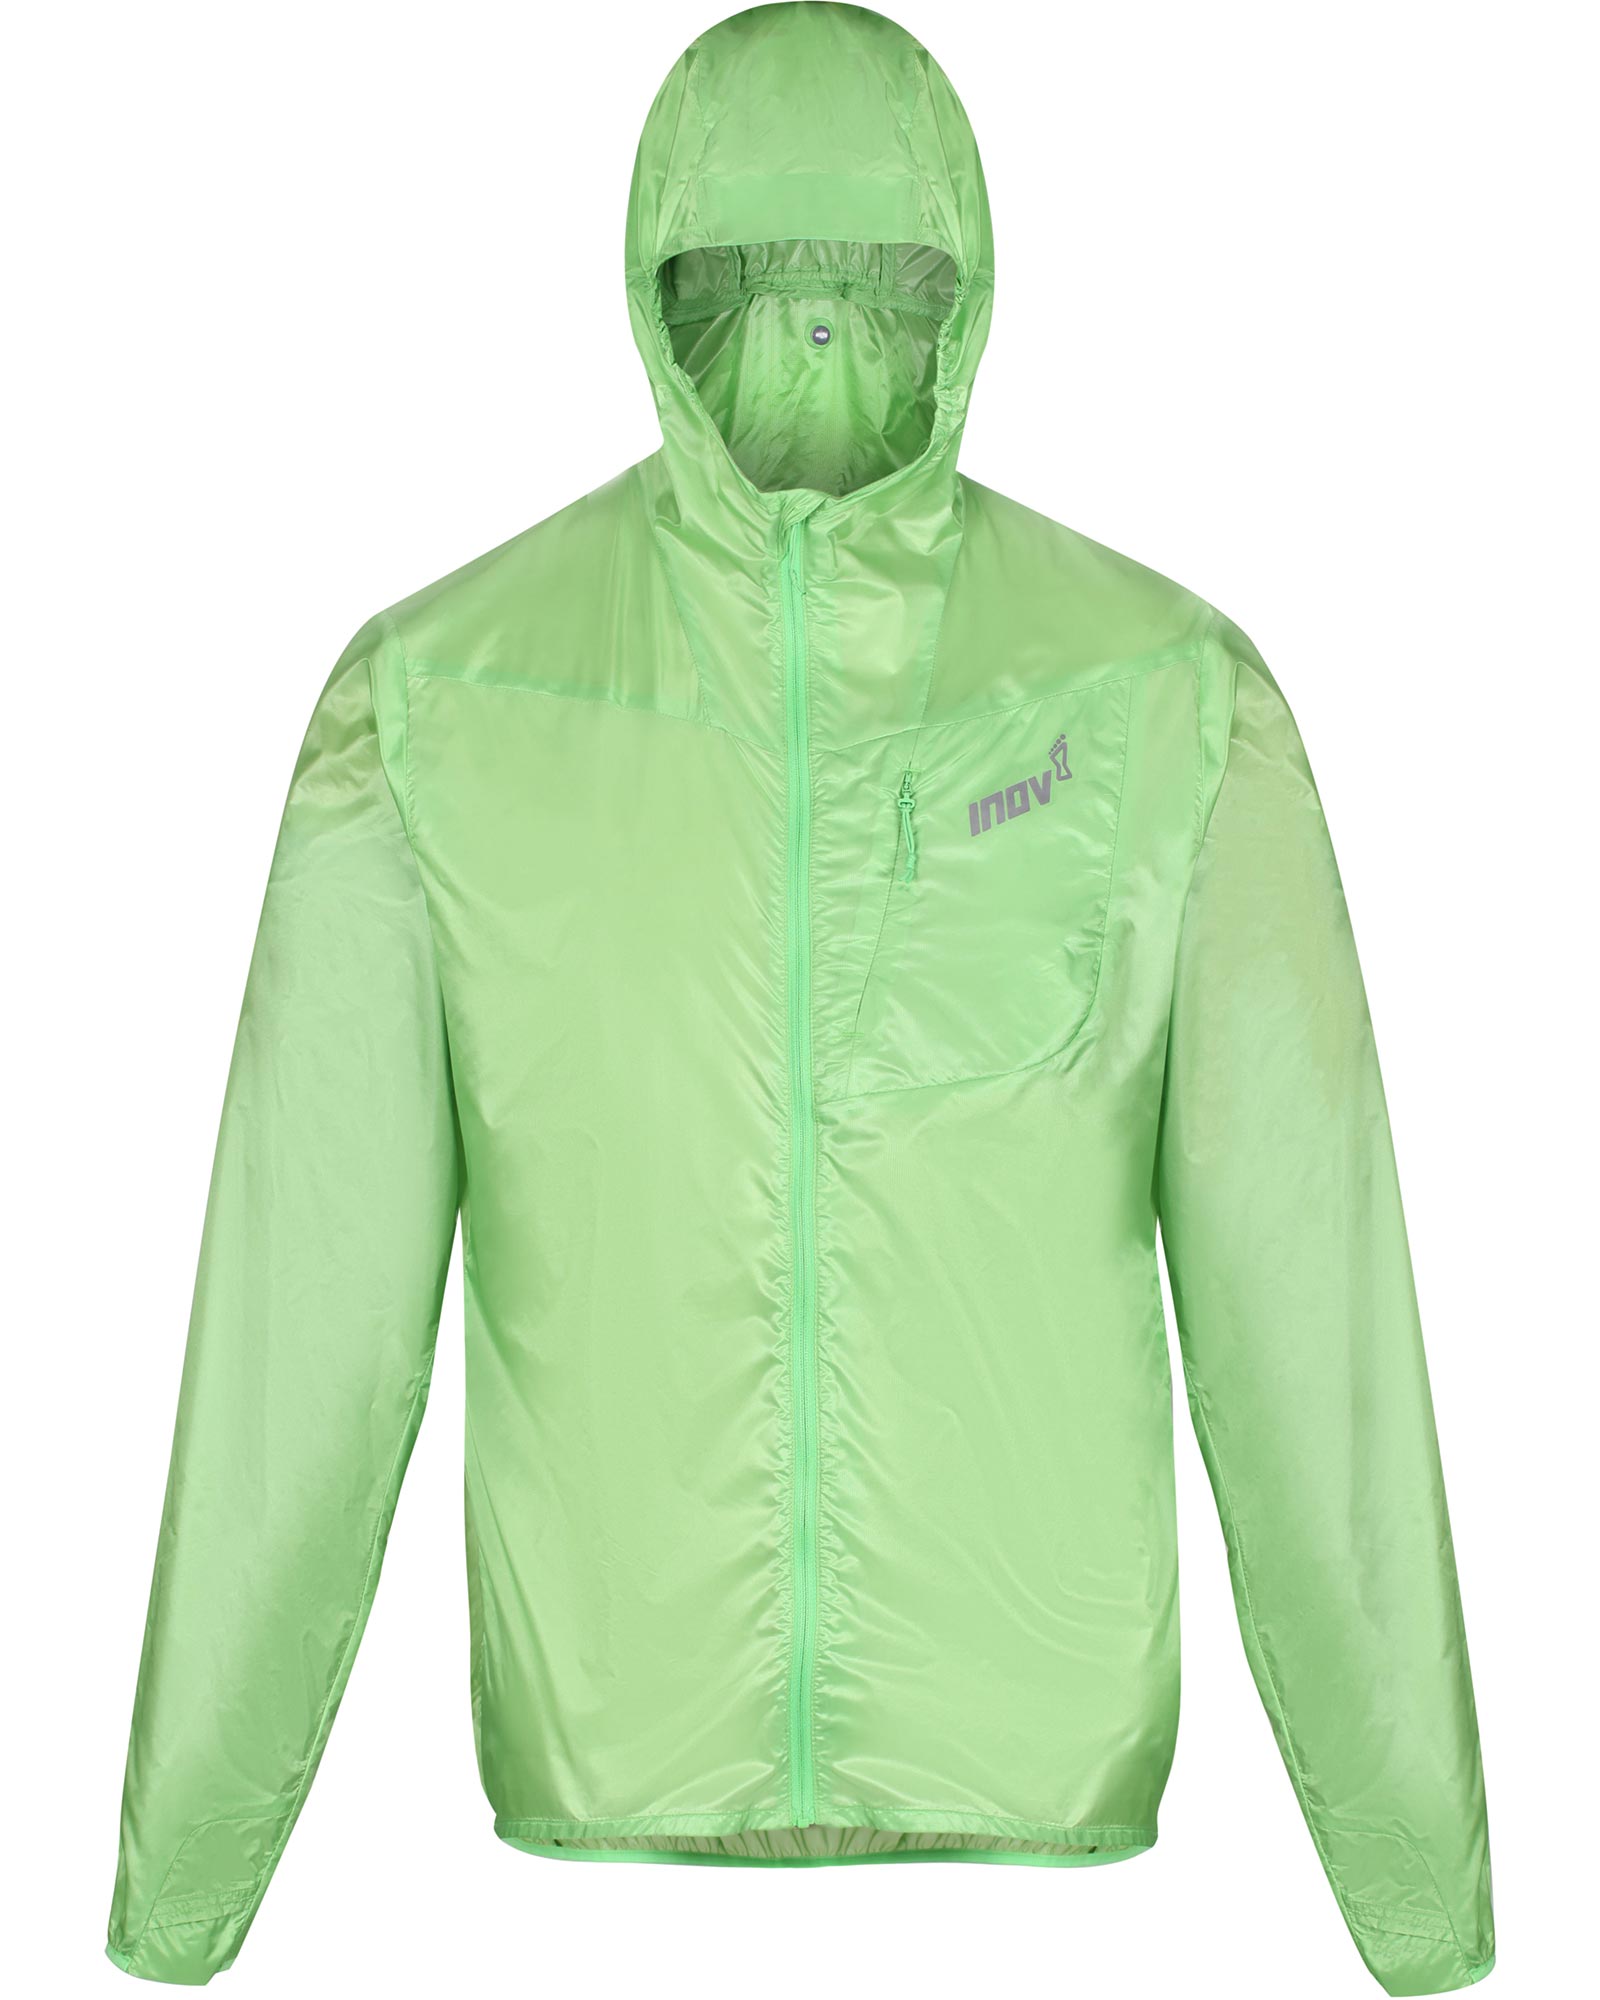 Inov 8 Men’s Full Zip Windshell Jacket - Green XL